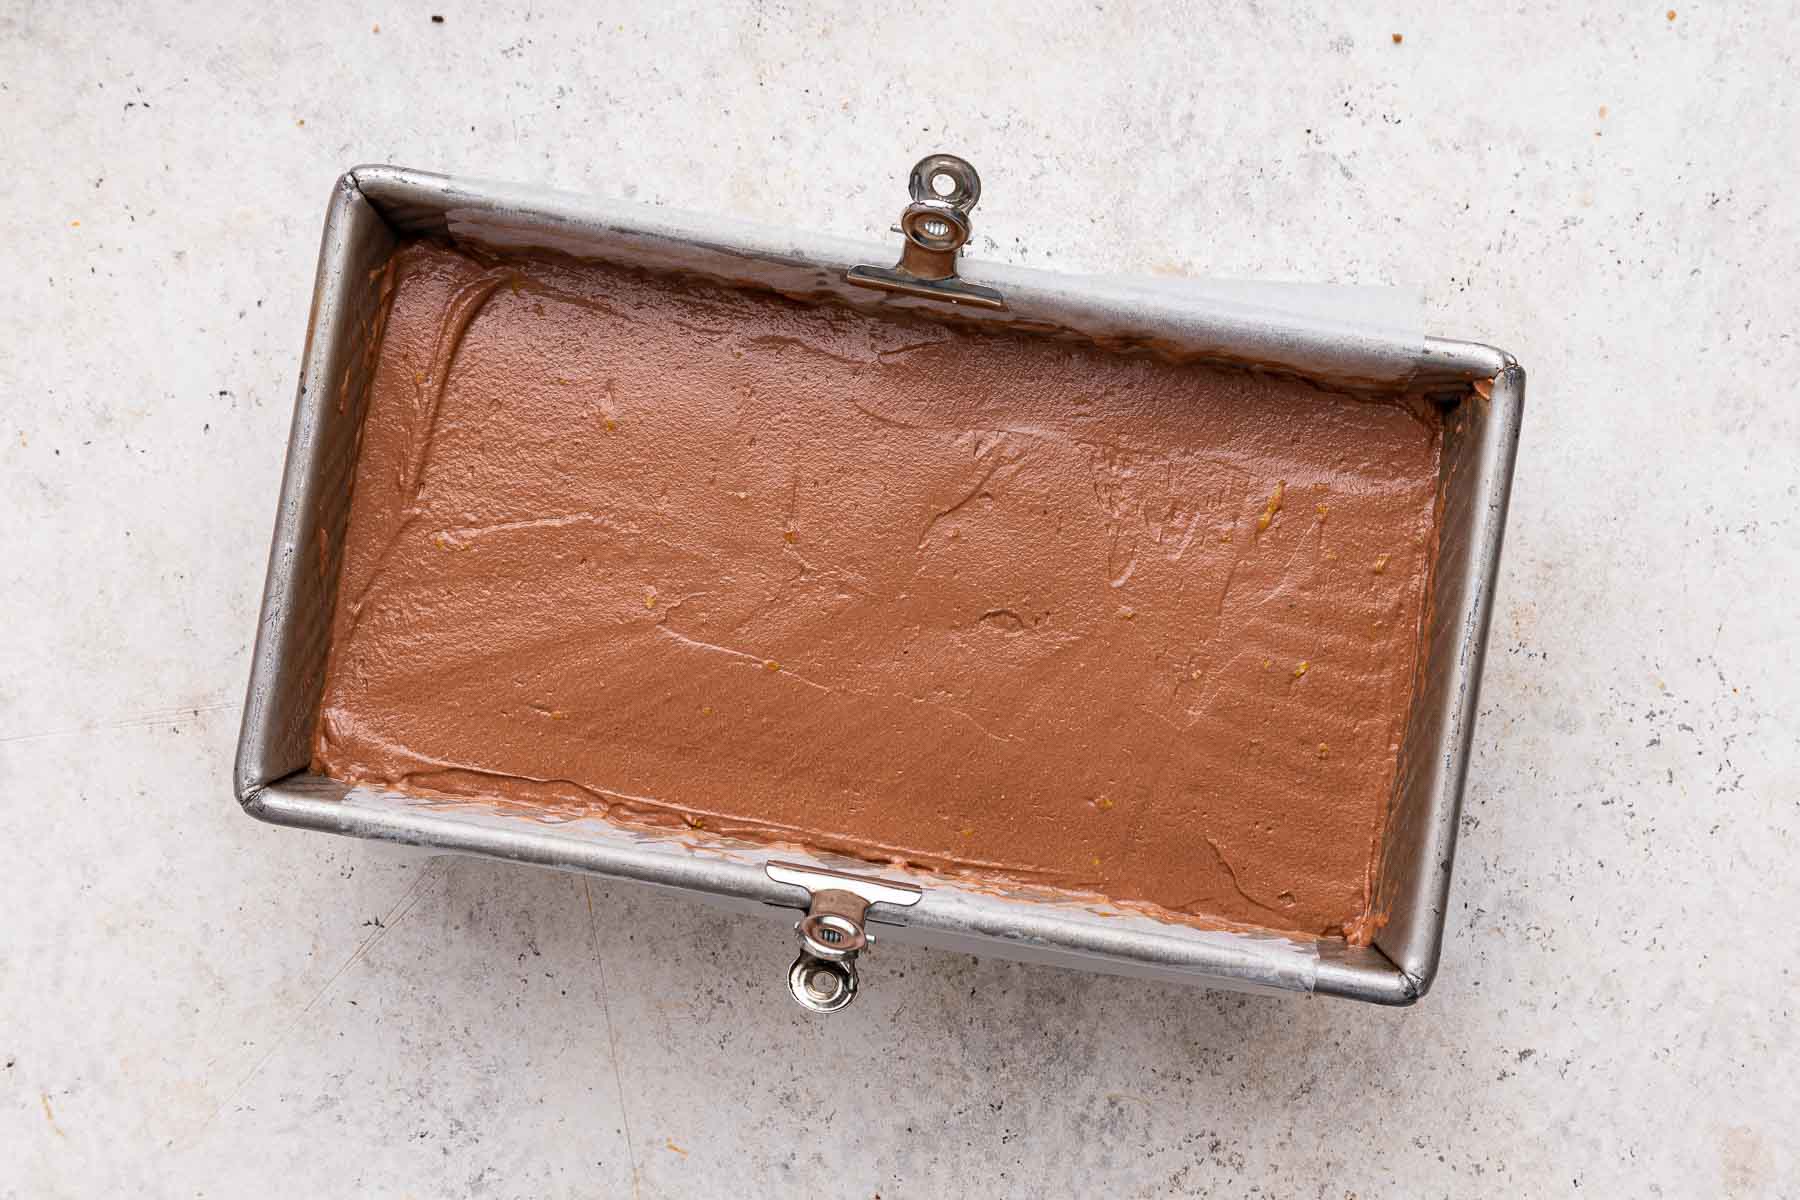 No bake chocolate orange cheesecake in a loaf pan.